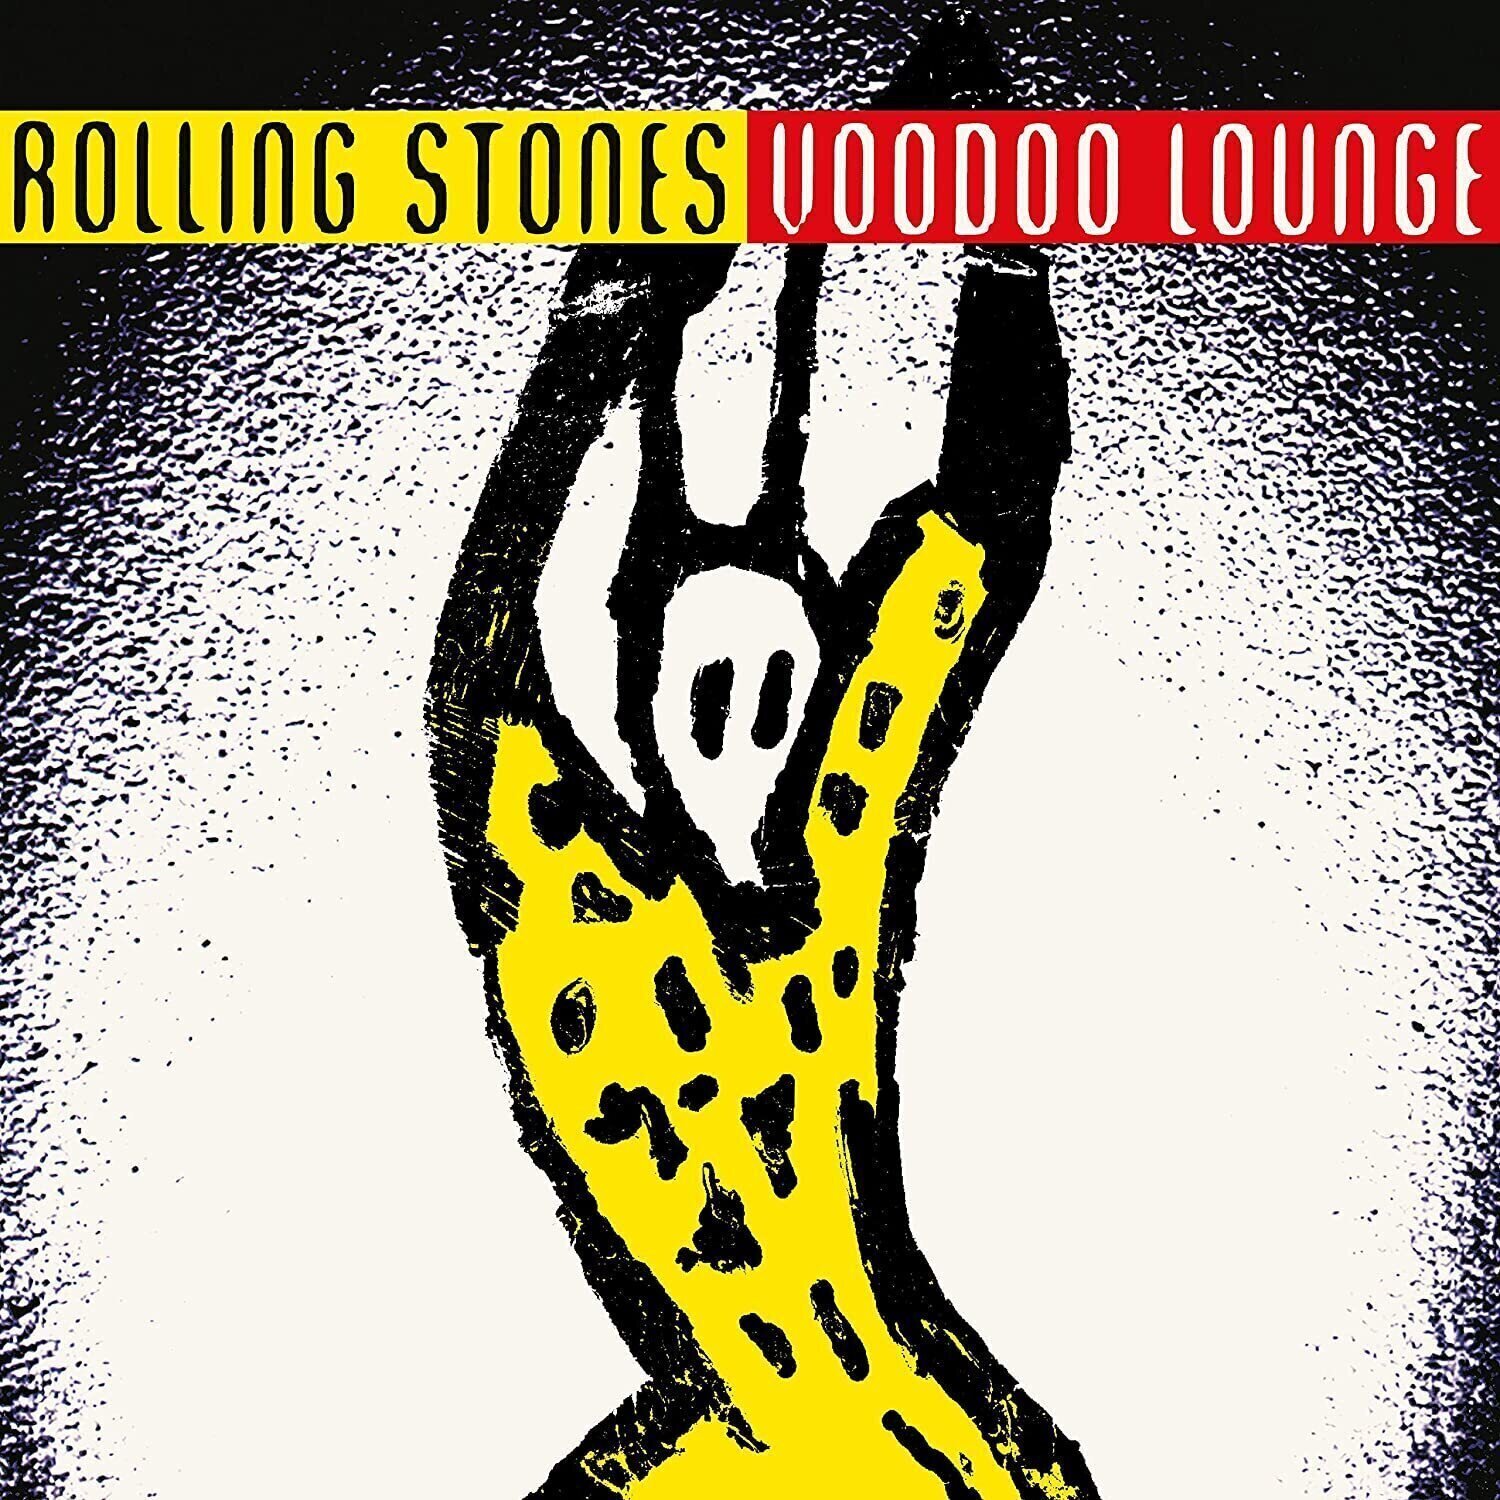 The Rolling Stones - Voodoo Lounge (Half Speed Mastered) (LP)